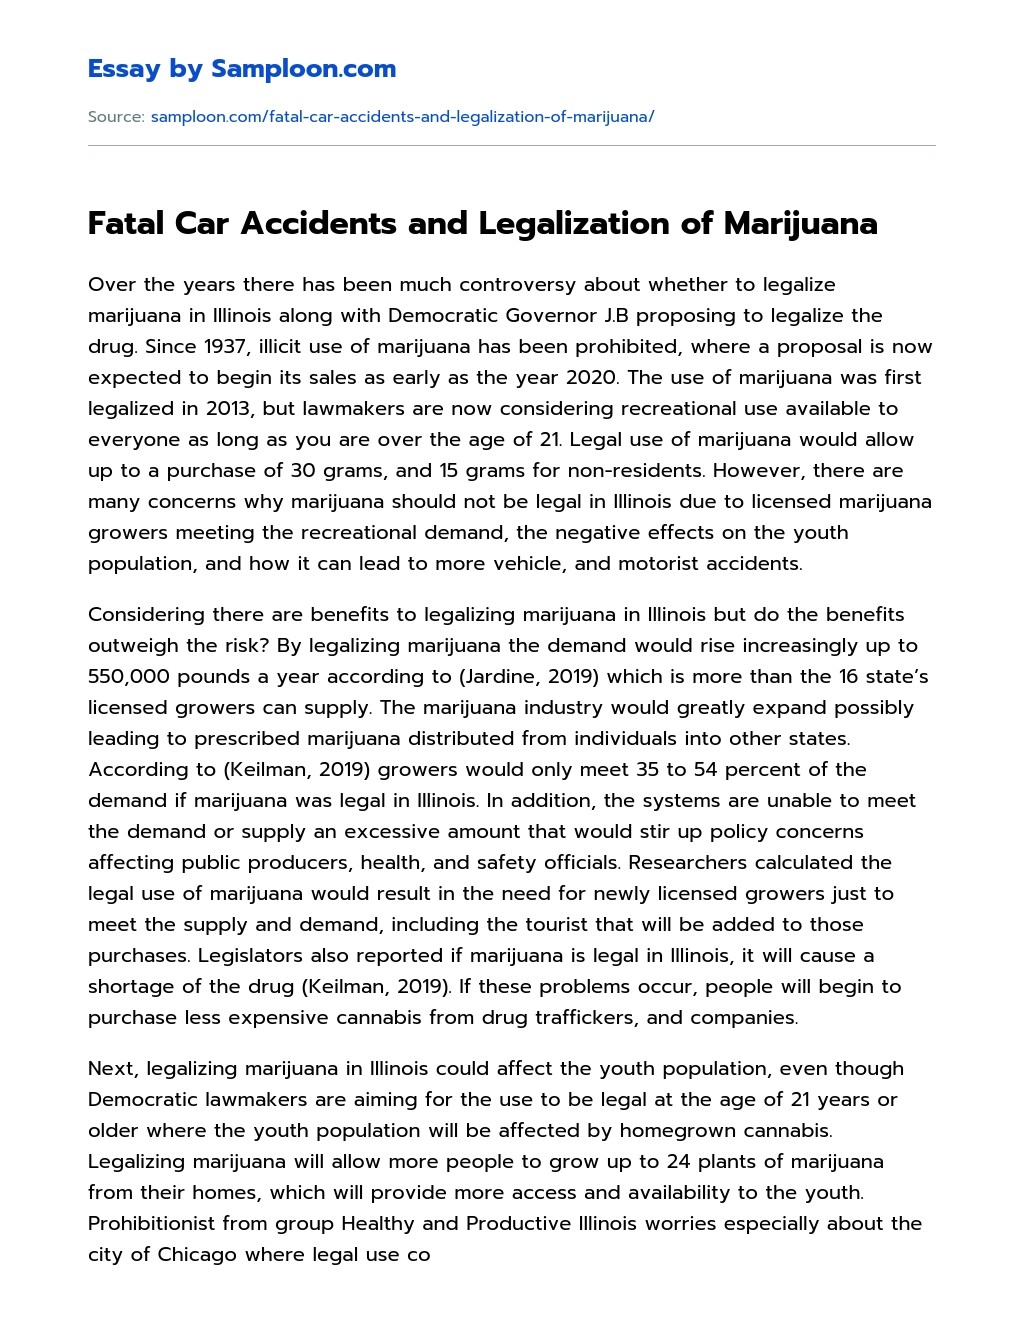 Fatal Car Accidents and Legalization of Marijuana essay